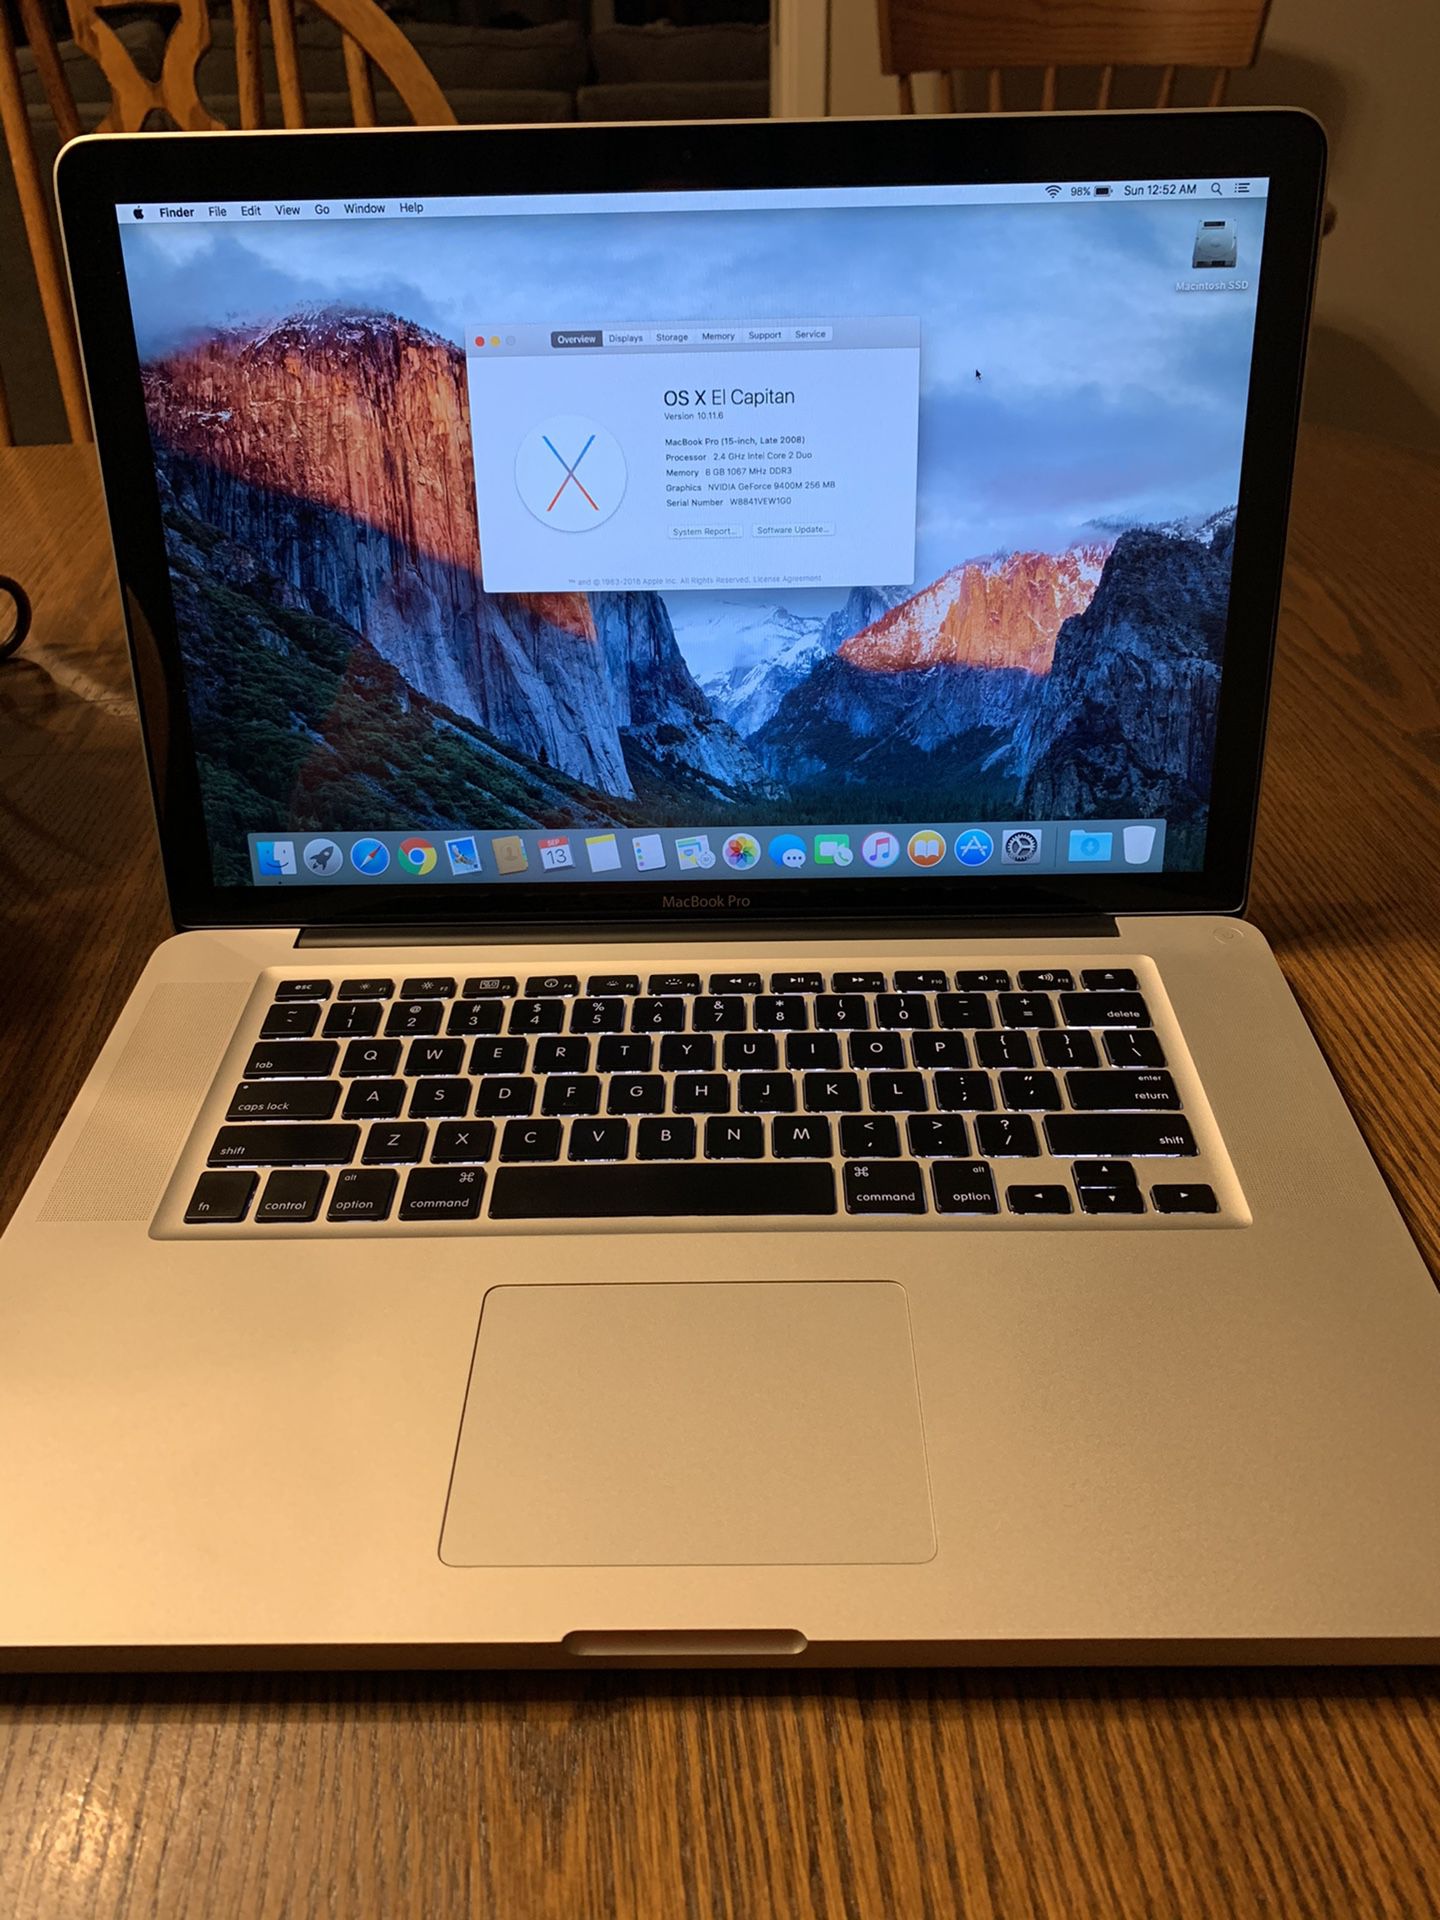 MacBook Pro 15” (Late 2008) 8gb ram / 500 gb SSD MINT Condition